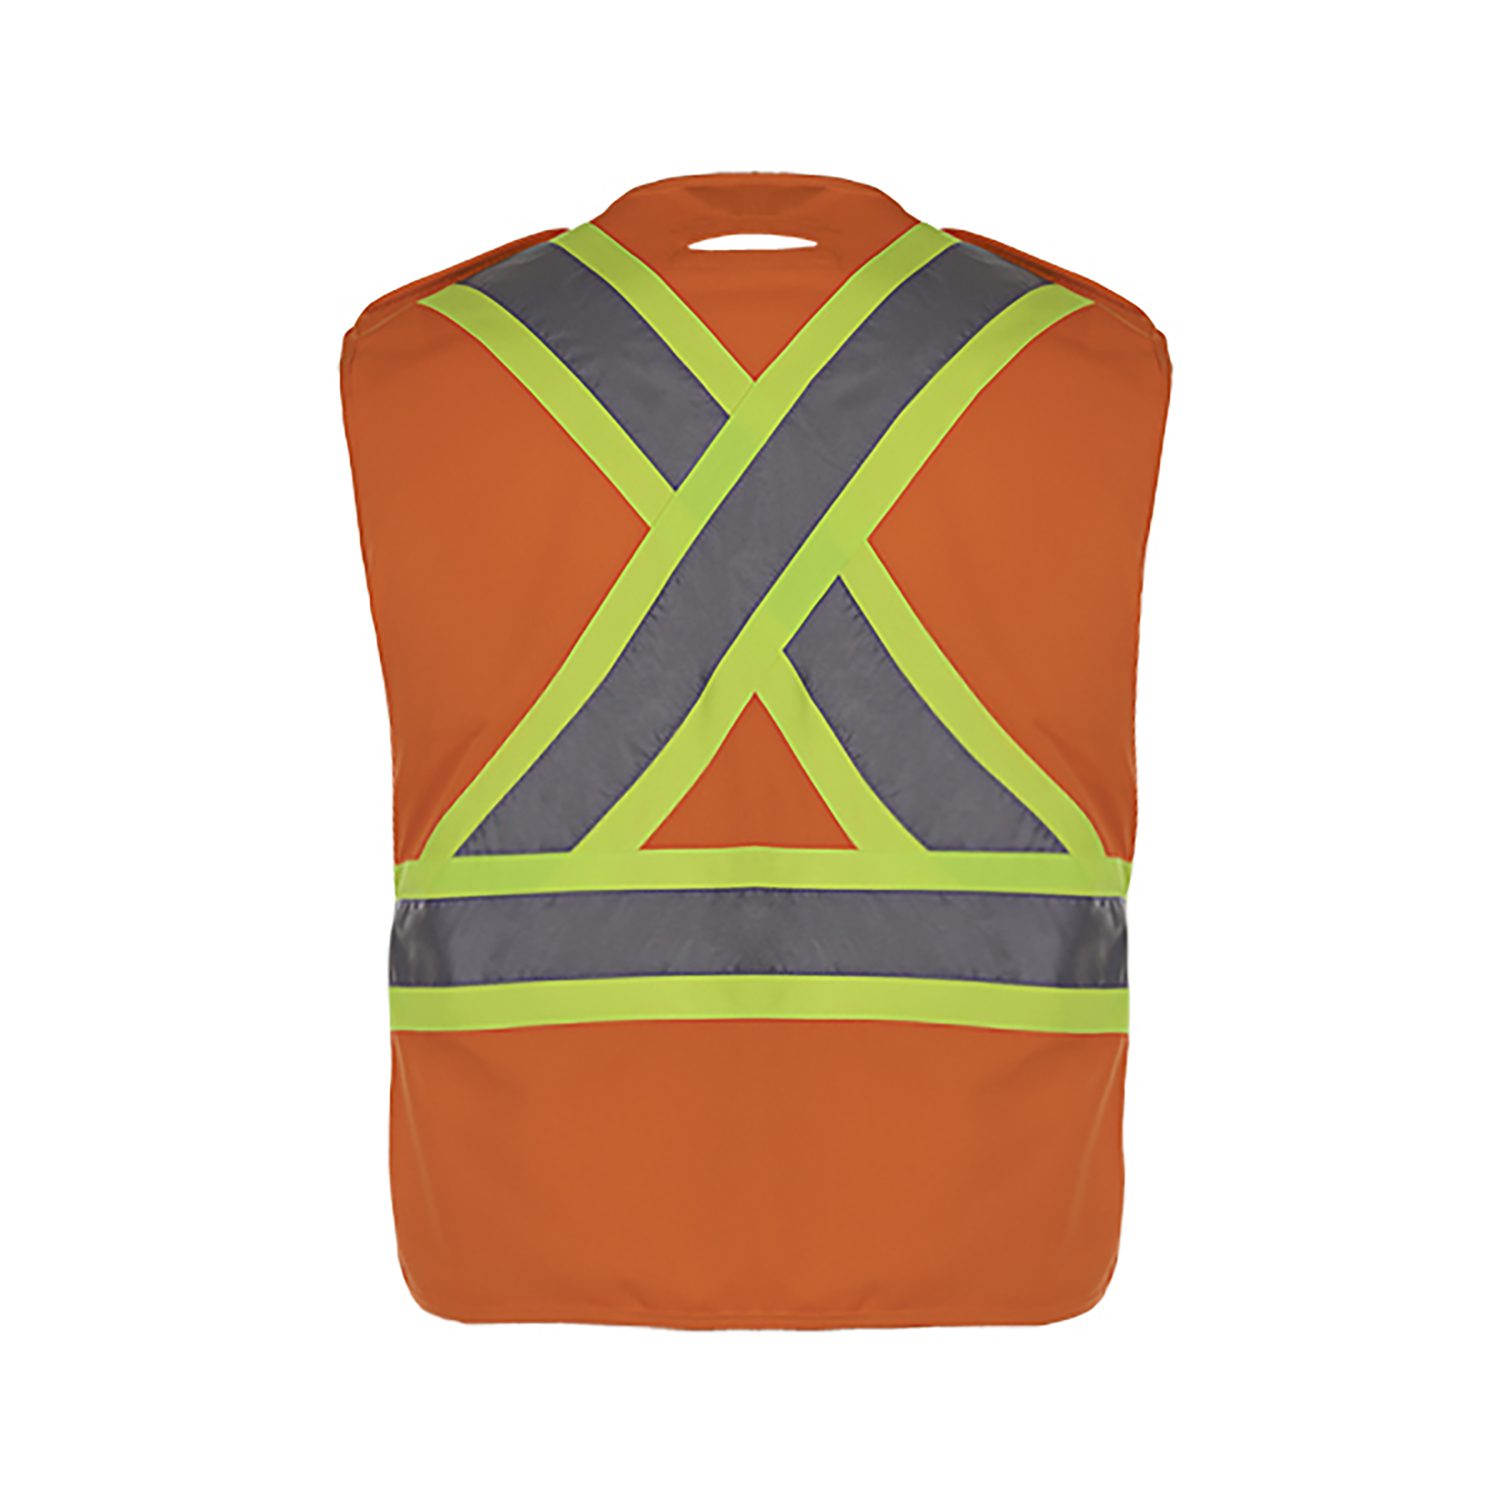 Canada Sportswear ONE SIZE HIGH VIS SAFETY VEST #L01170 Orange Back